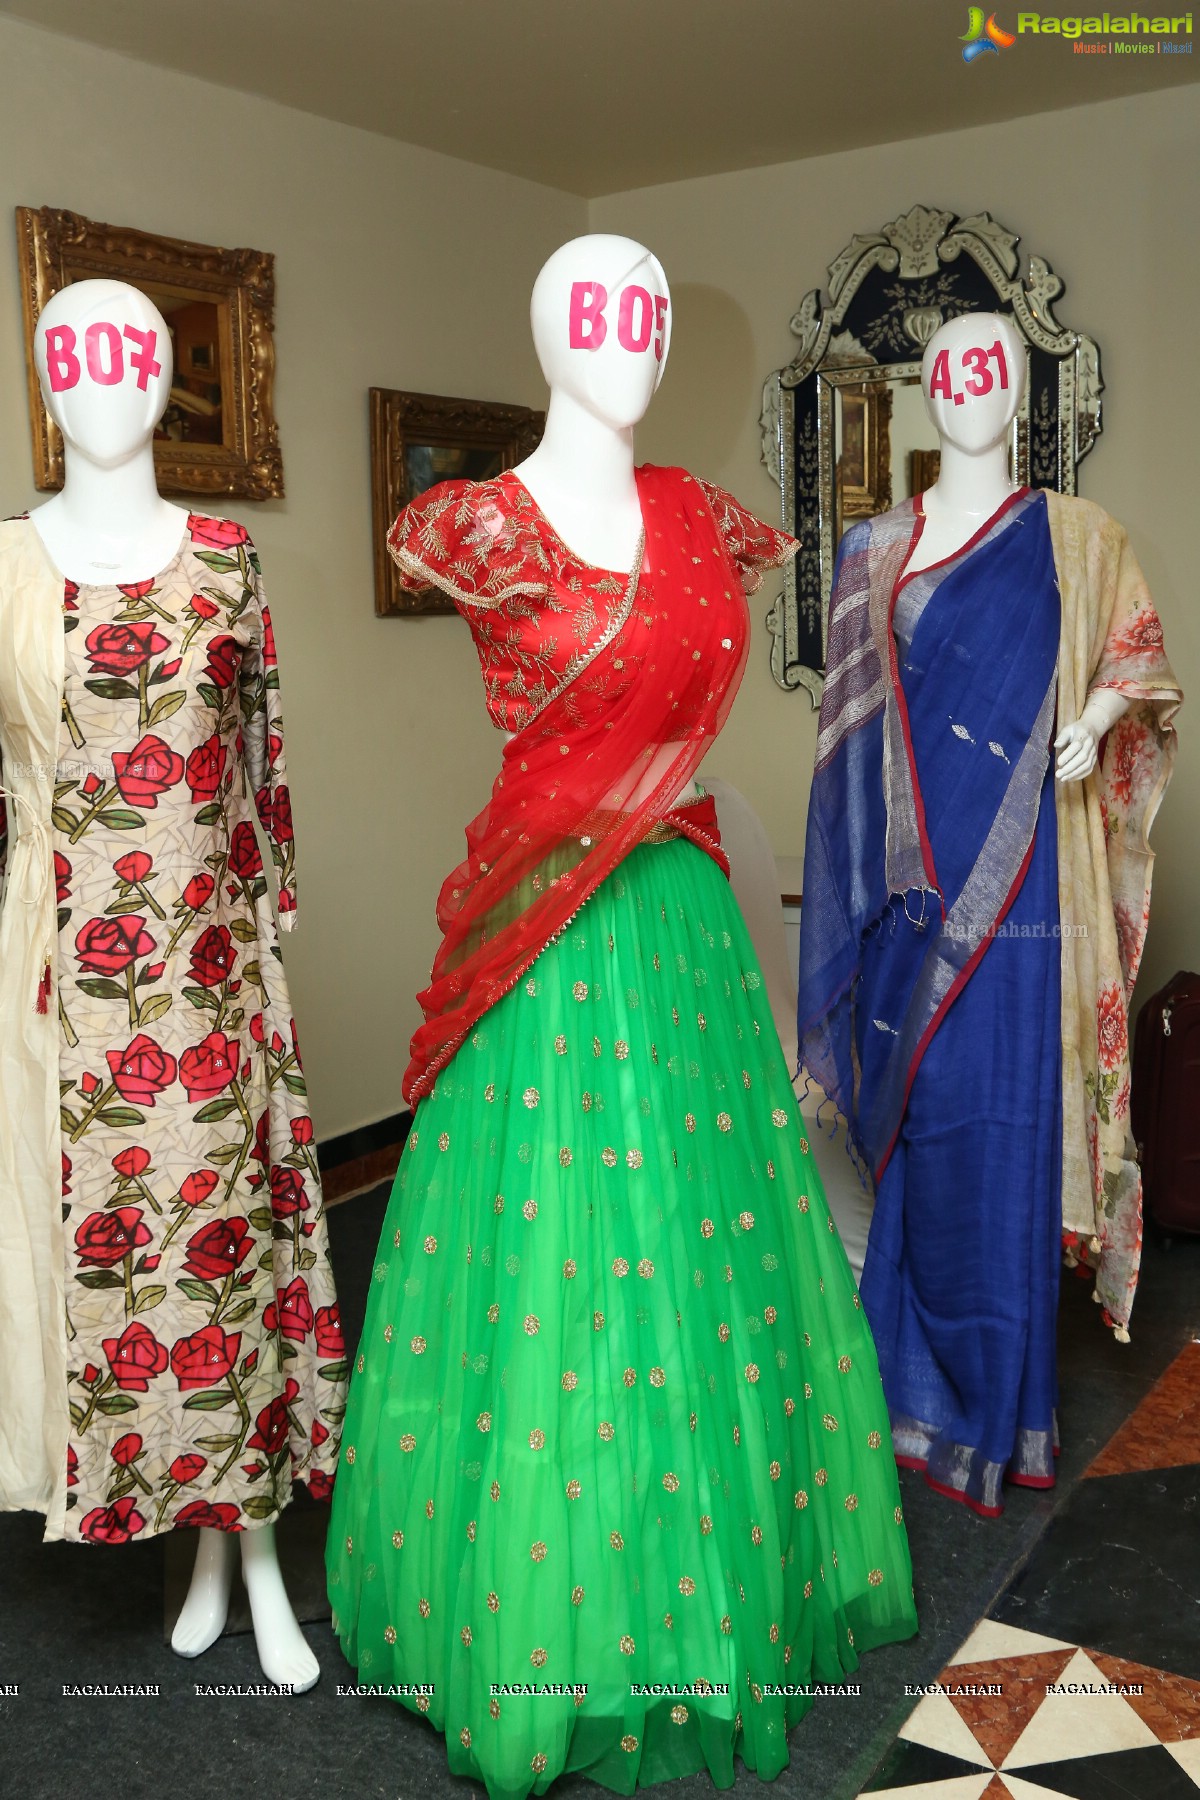 Trendz Lifestyle Expo Begins at Taj Krishna